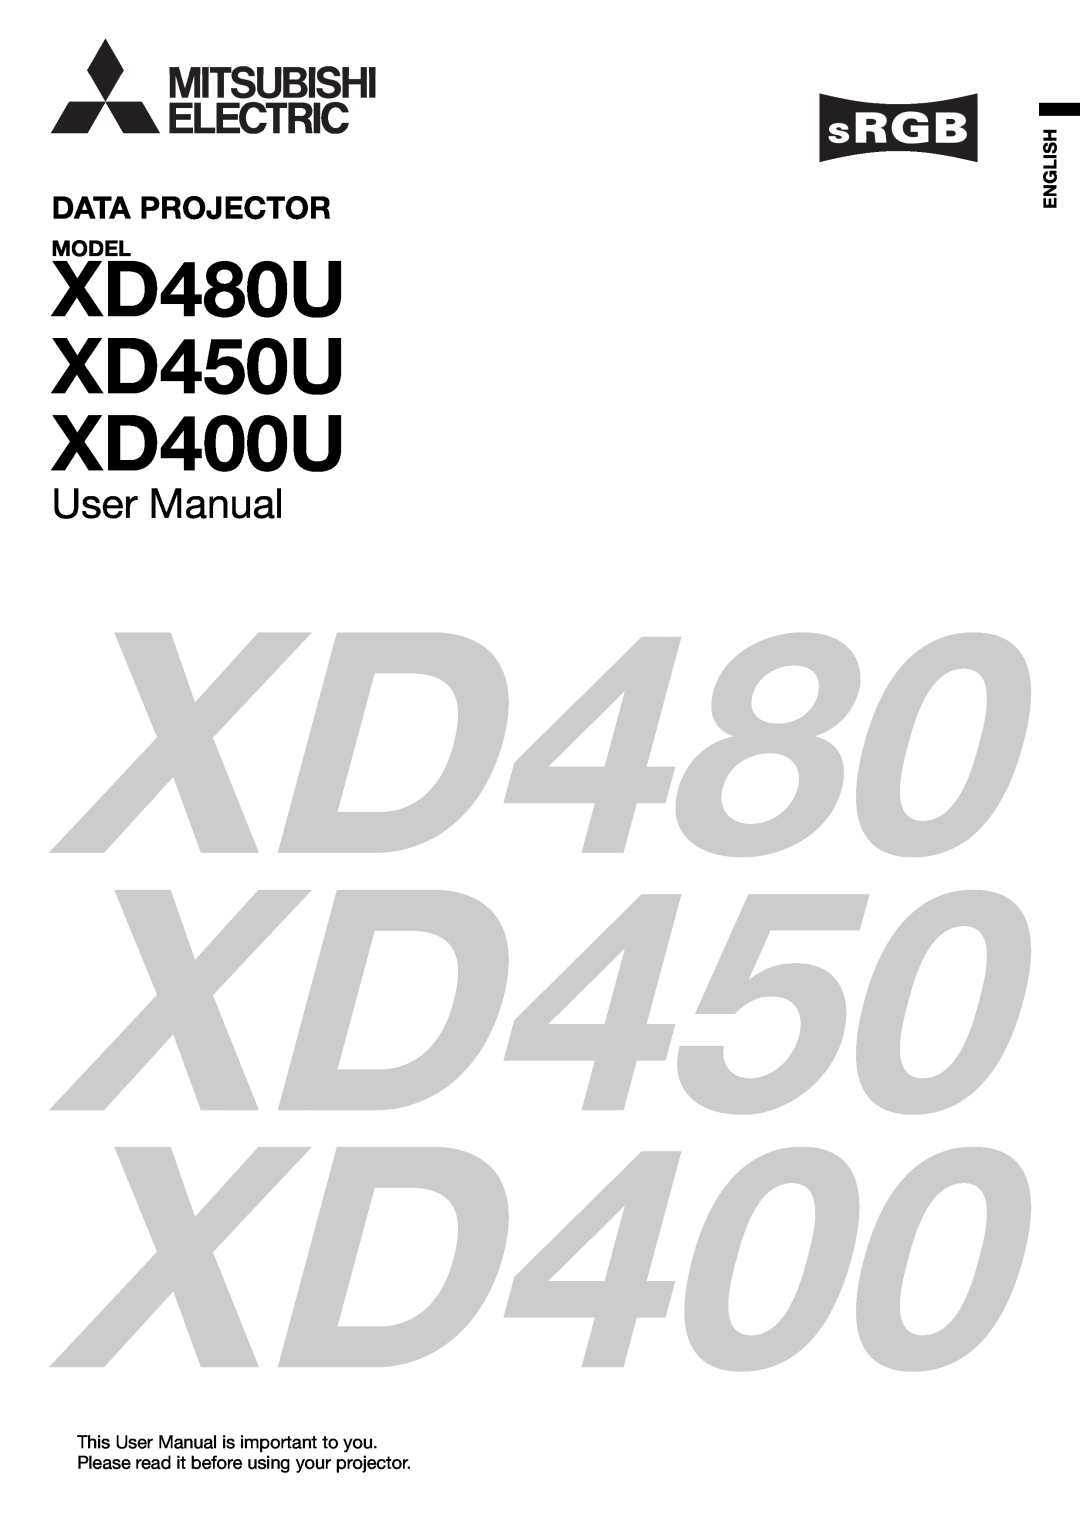 Mitsubishi Electronics user manual Data Projector, Model, XD480 XD450 XD400, XD480U XD450U XD400U, User Manual 